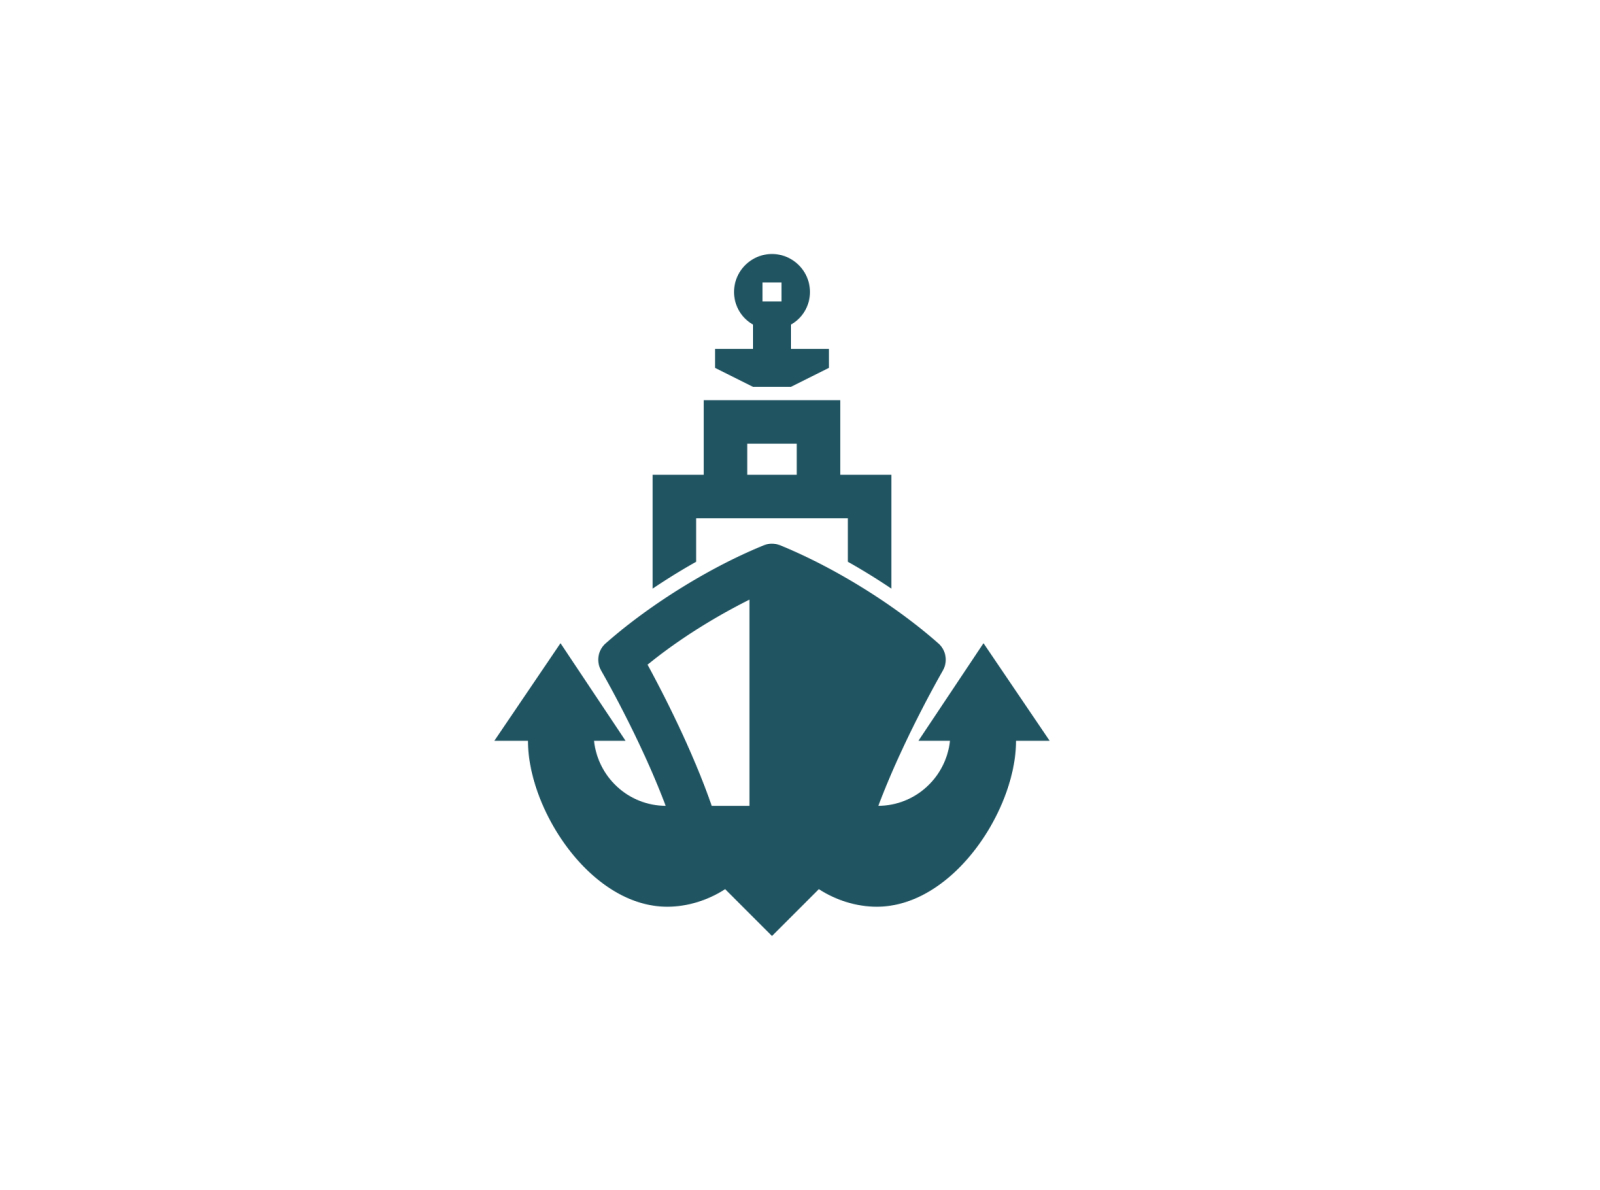 Ship Anchor Logo Design by Rizki Adhitya Pratama on Dribbble